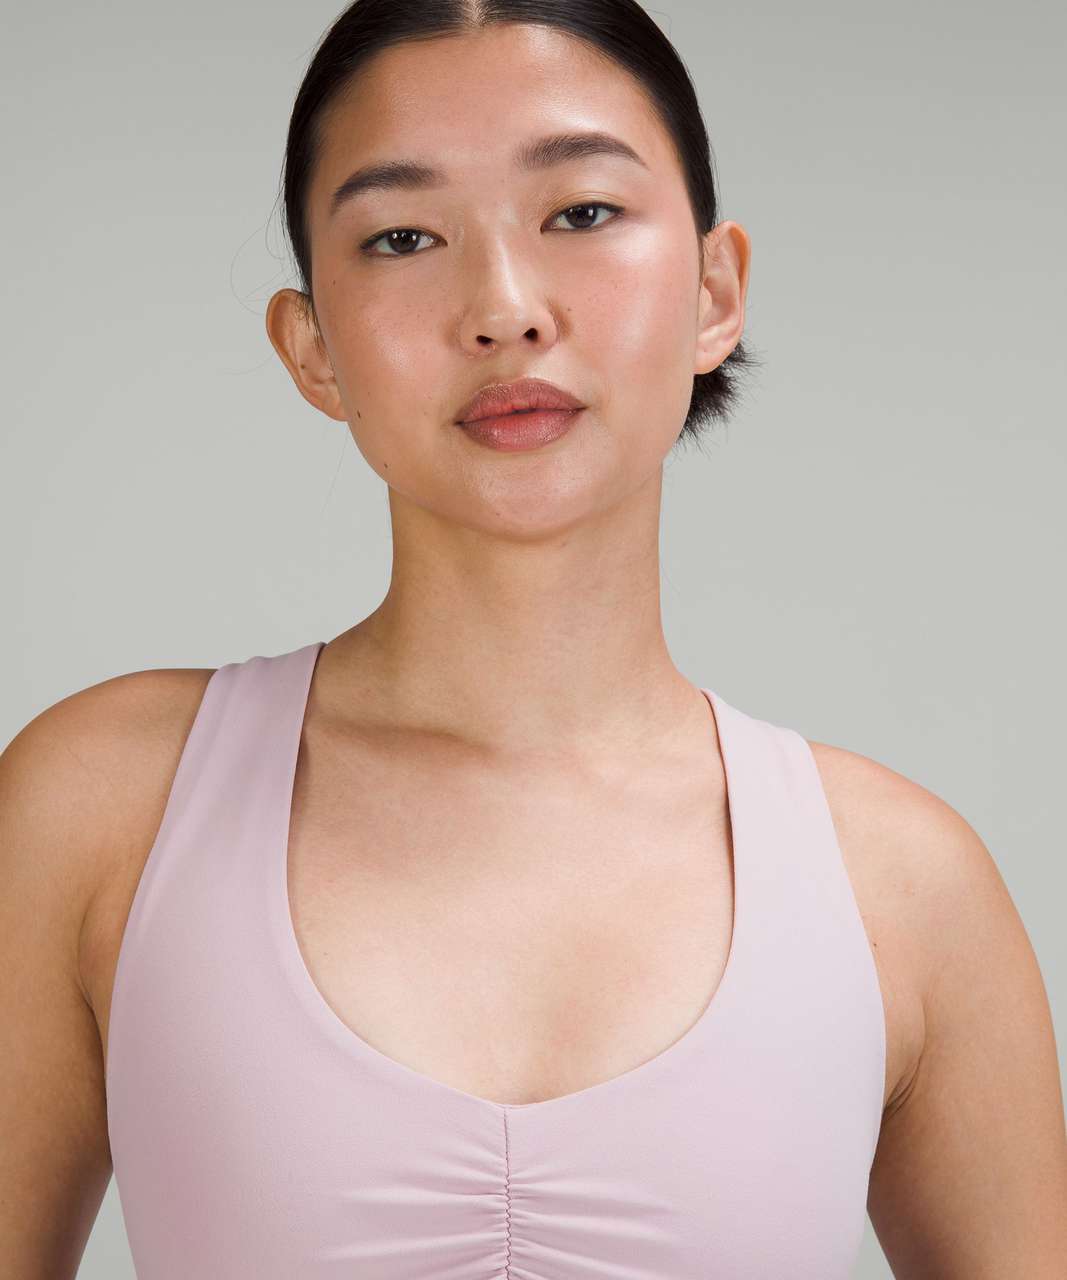 Lulu Designer Yarn Yoga Longline Sports Bra Tank U Neck Nude Sense